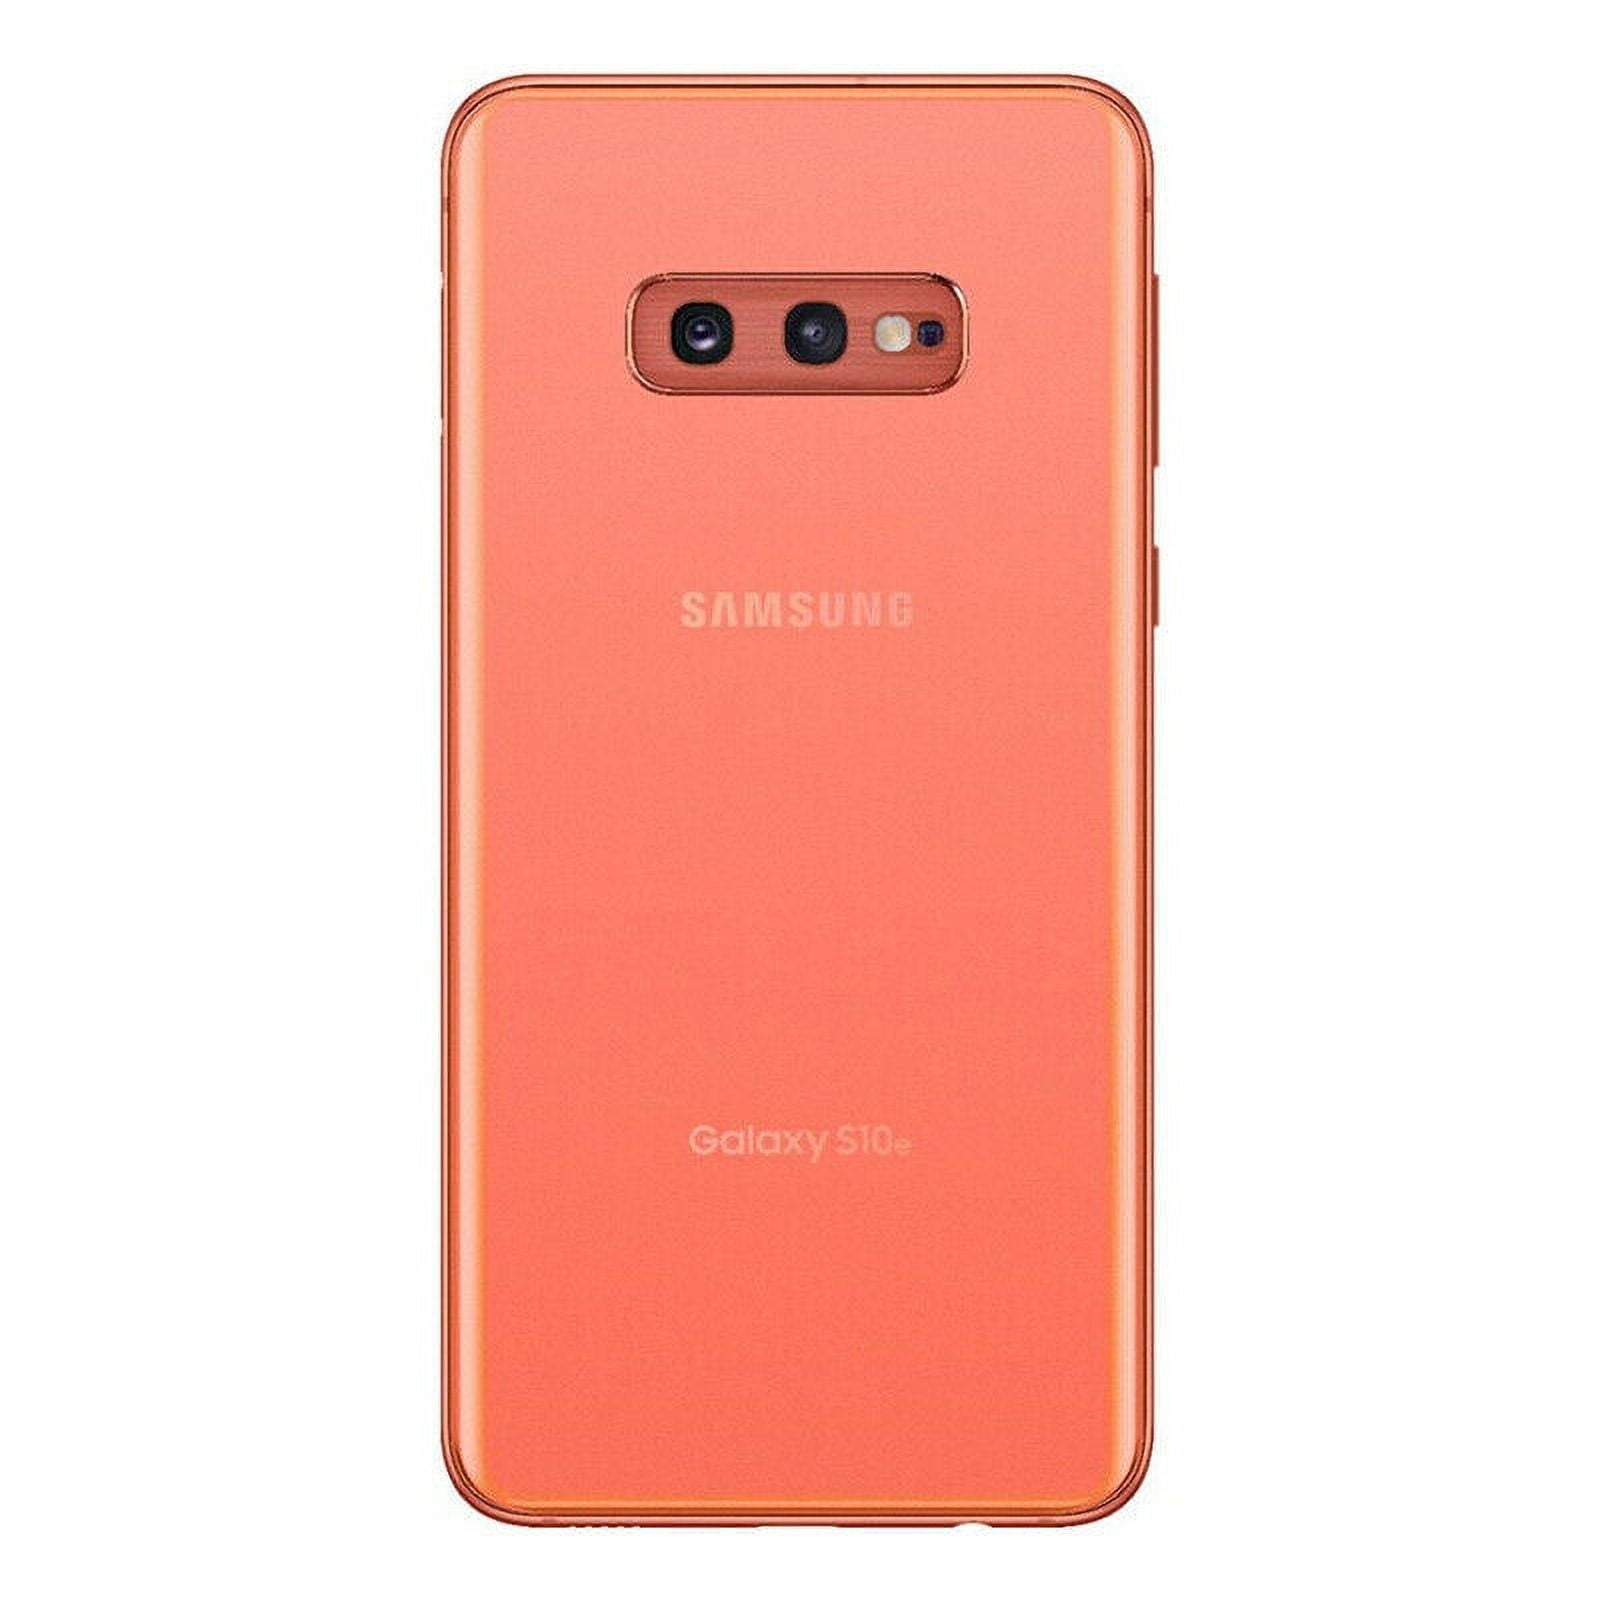  Samsung Galaxy S10e 128GB+6GB RAM SM-G970 Dual Sim 5.8